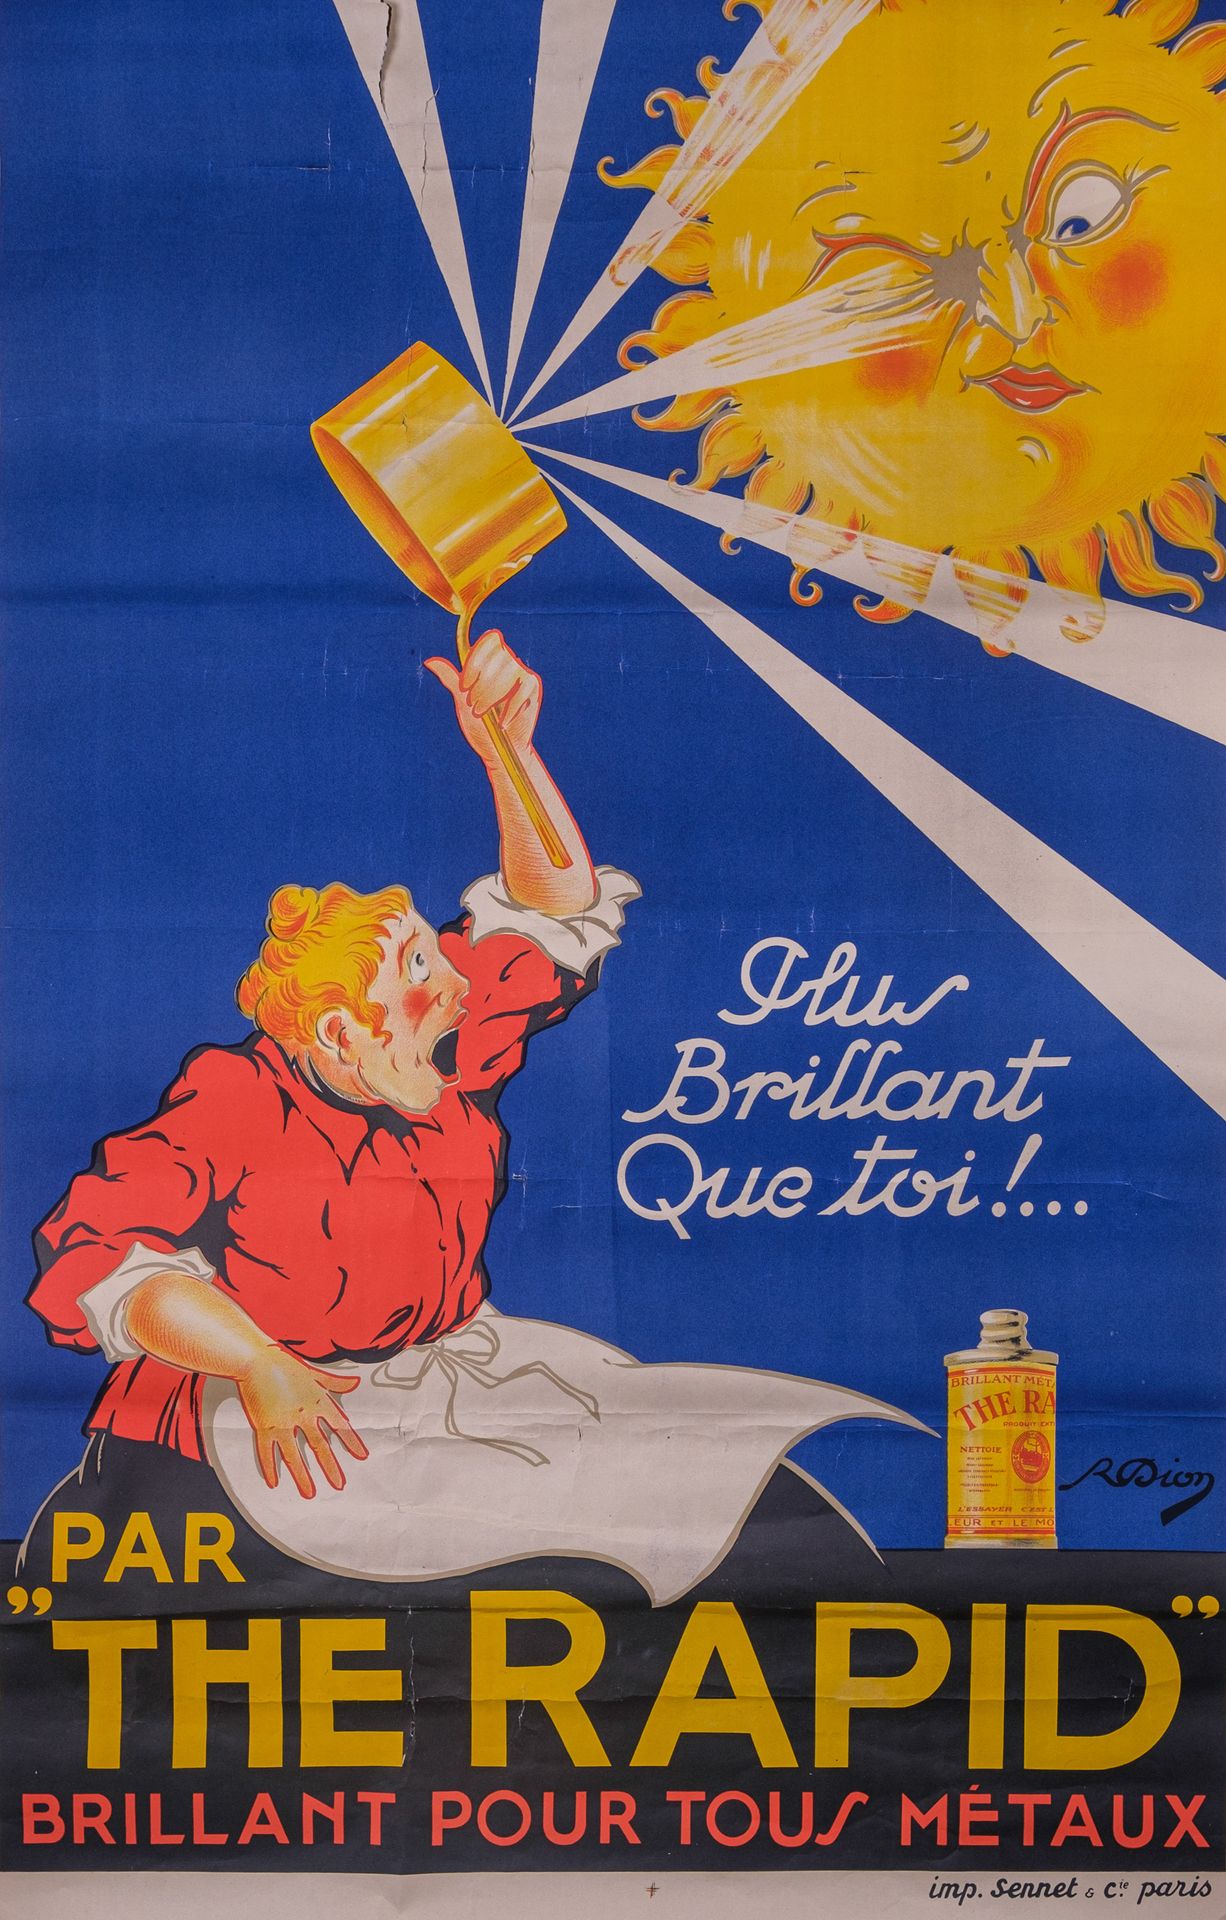 Null [广告] 广告海报

"比你更辉煌 "的所有金属的辉煌。R. DION的彩色海报，由SENET印刷，尺寸：120 x 80厘米（泪）。

- "Pho&hellip;